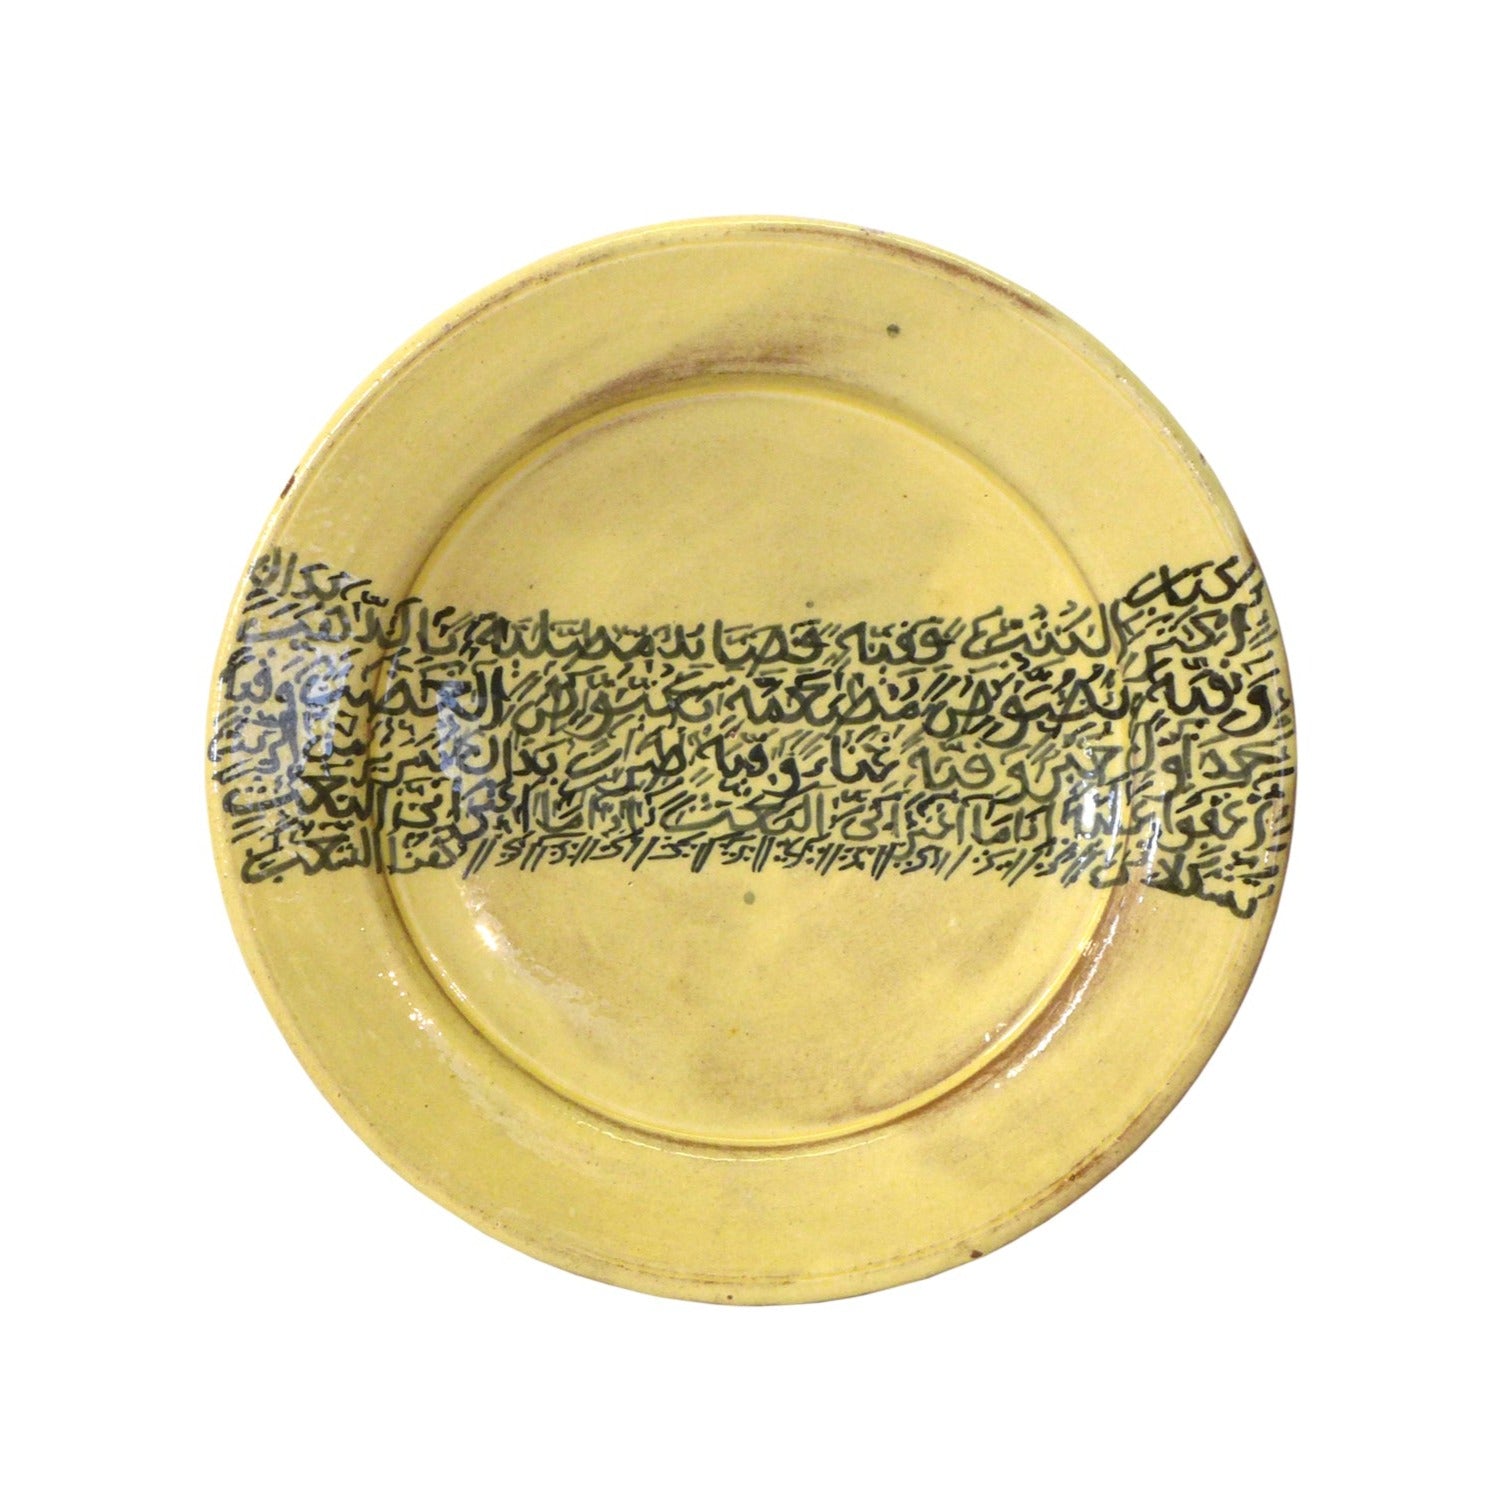 Glazed Ceramic Decorative Plate with Arabic Script